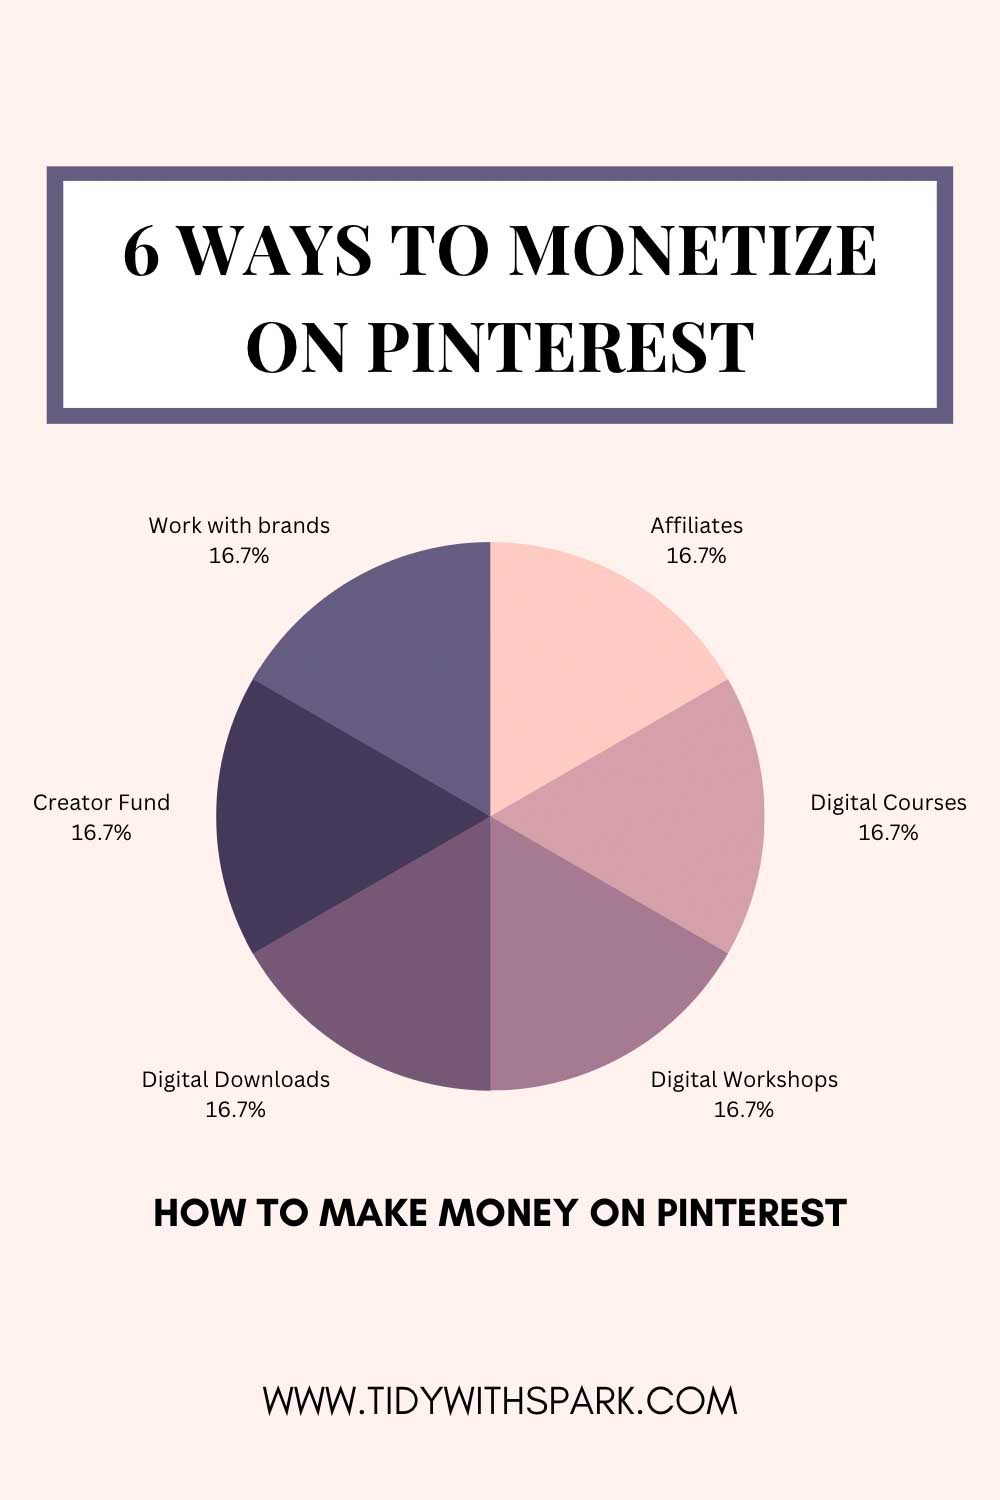 Pie chart of 6 ways to monetize on Pinterest